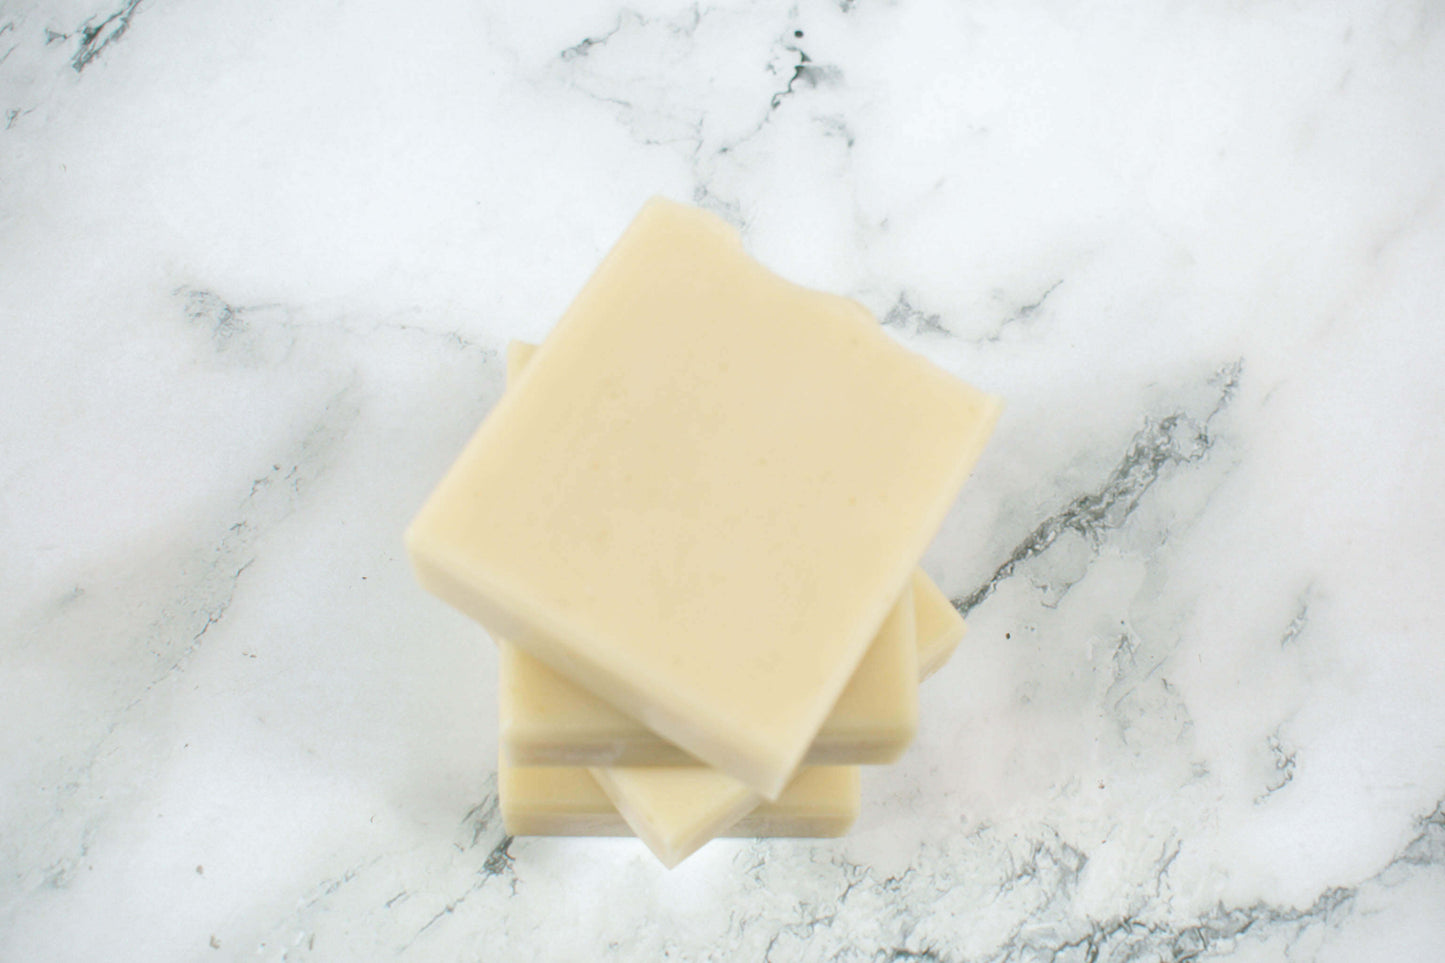 Naked (Unscented) Oat Milk Triple Butter Bar Soap